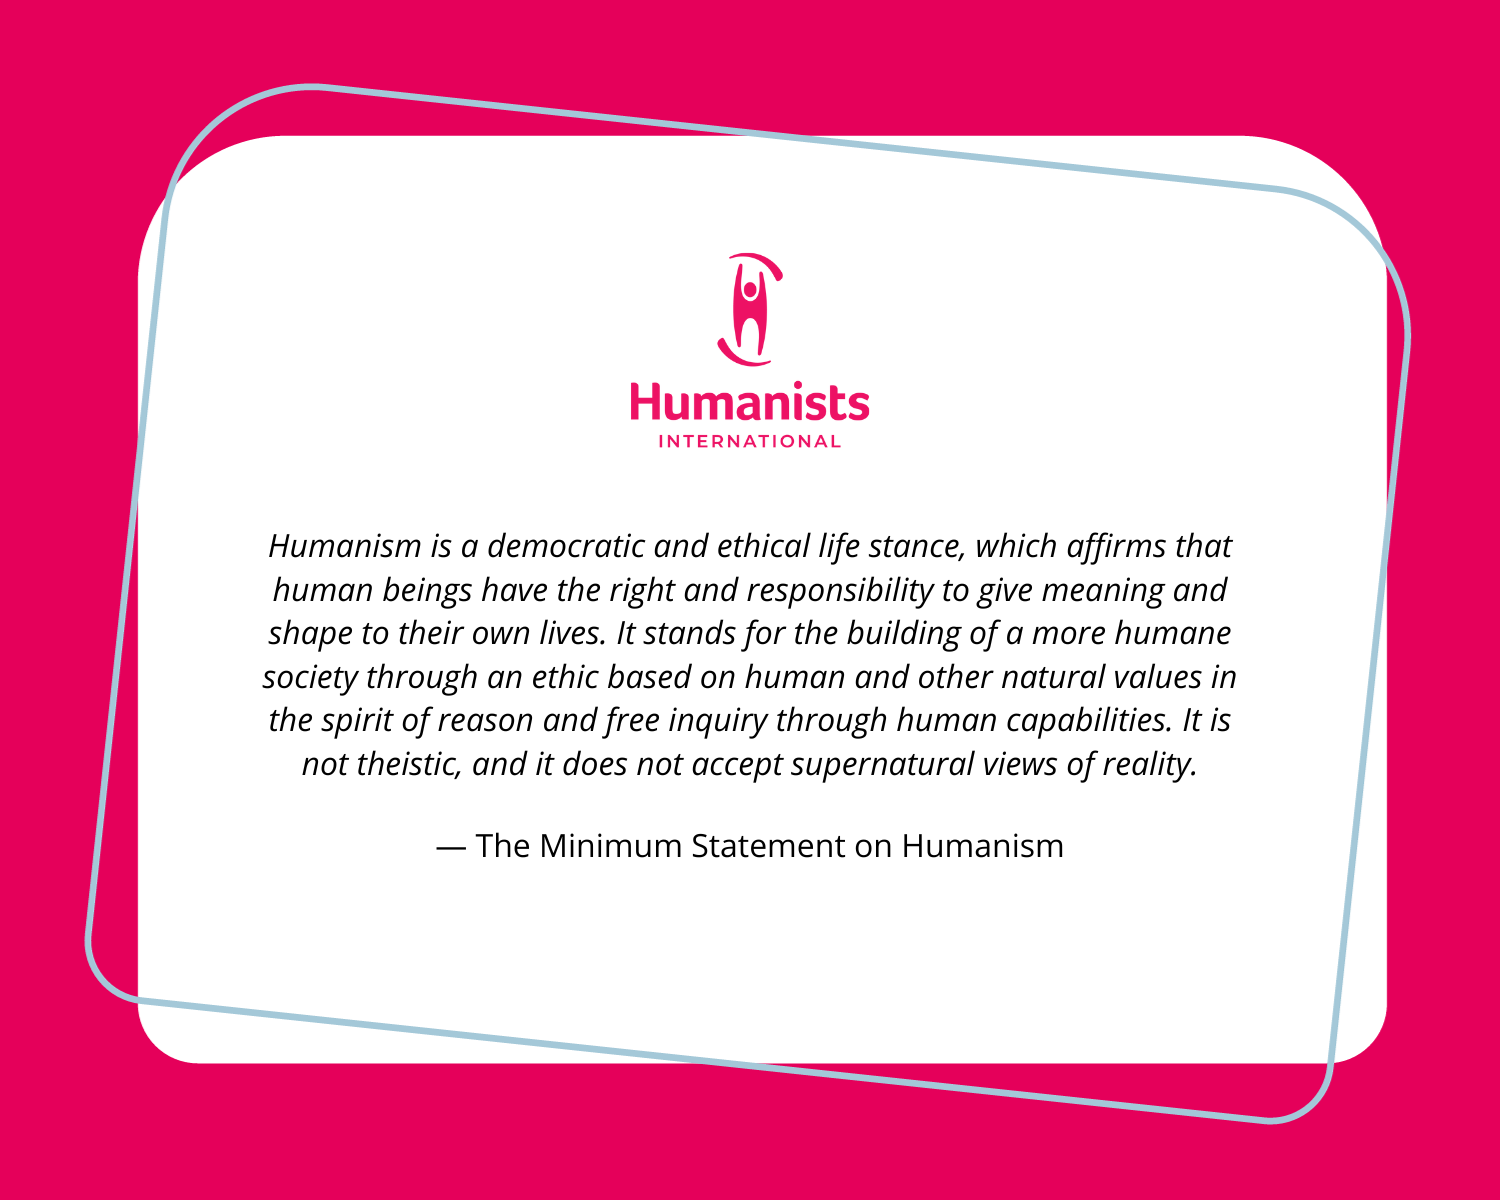 The Minimum Statement on Humanism